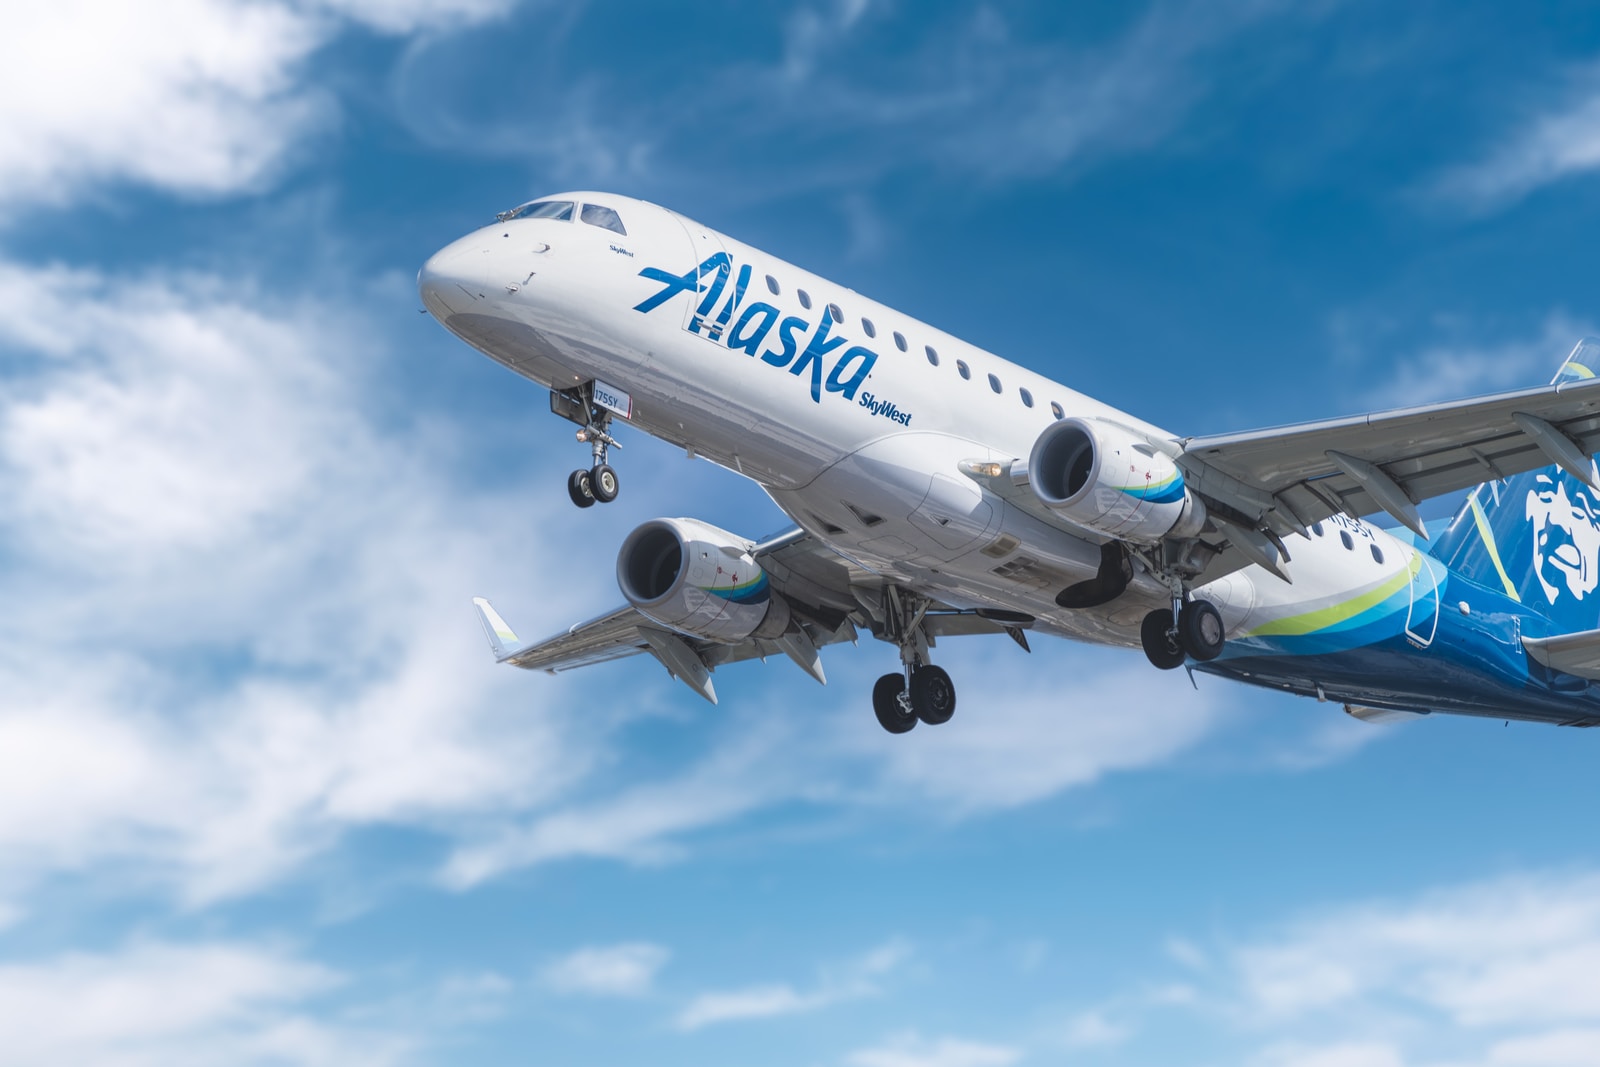 Alaska airlines flight picture